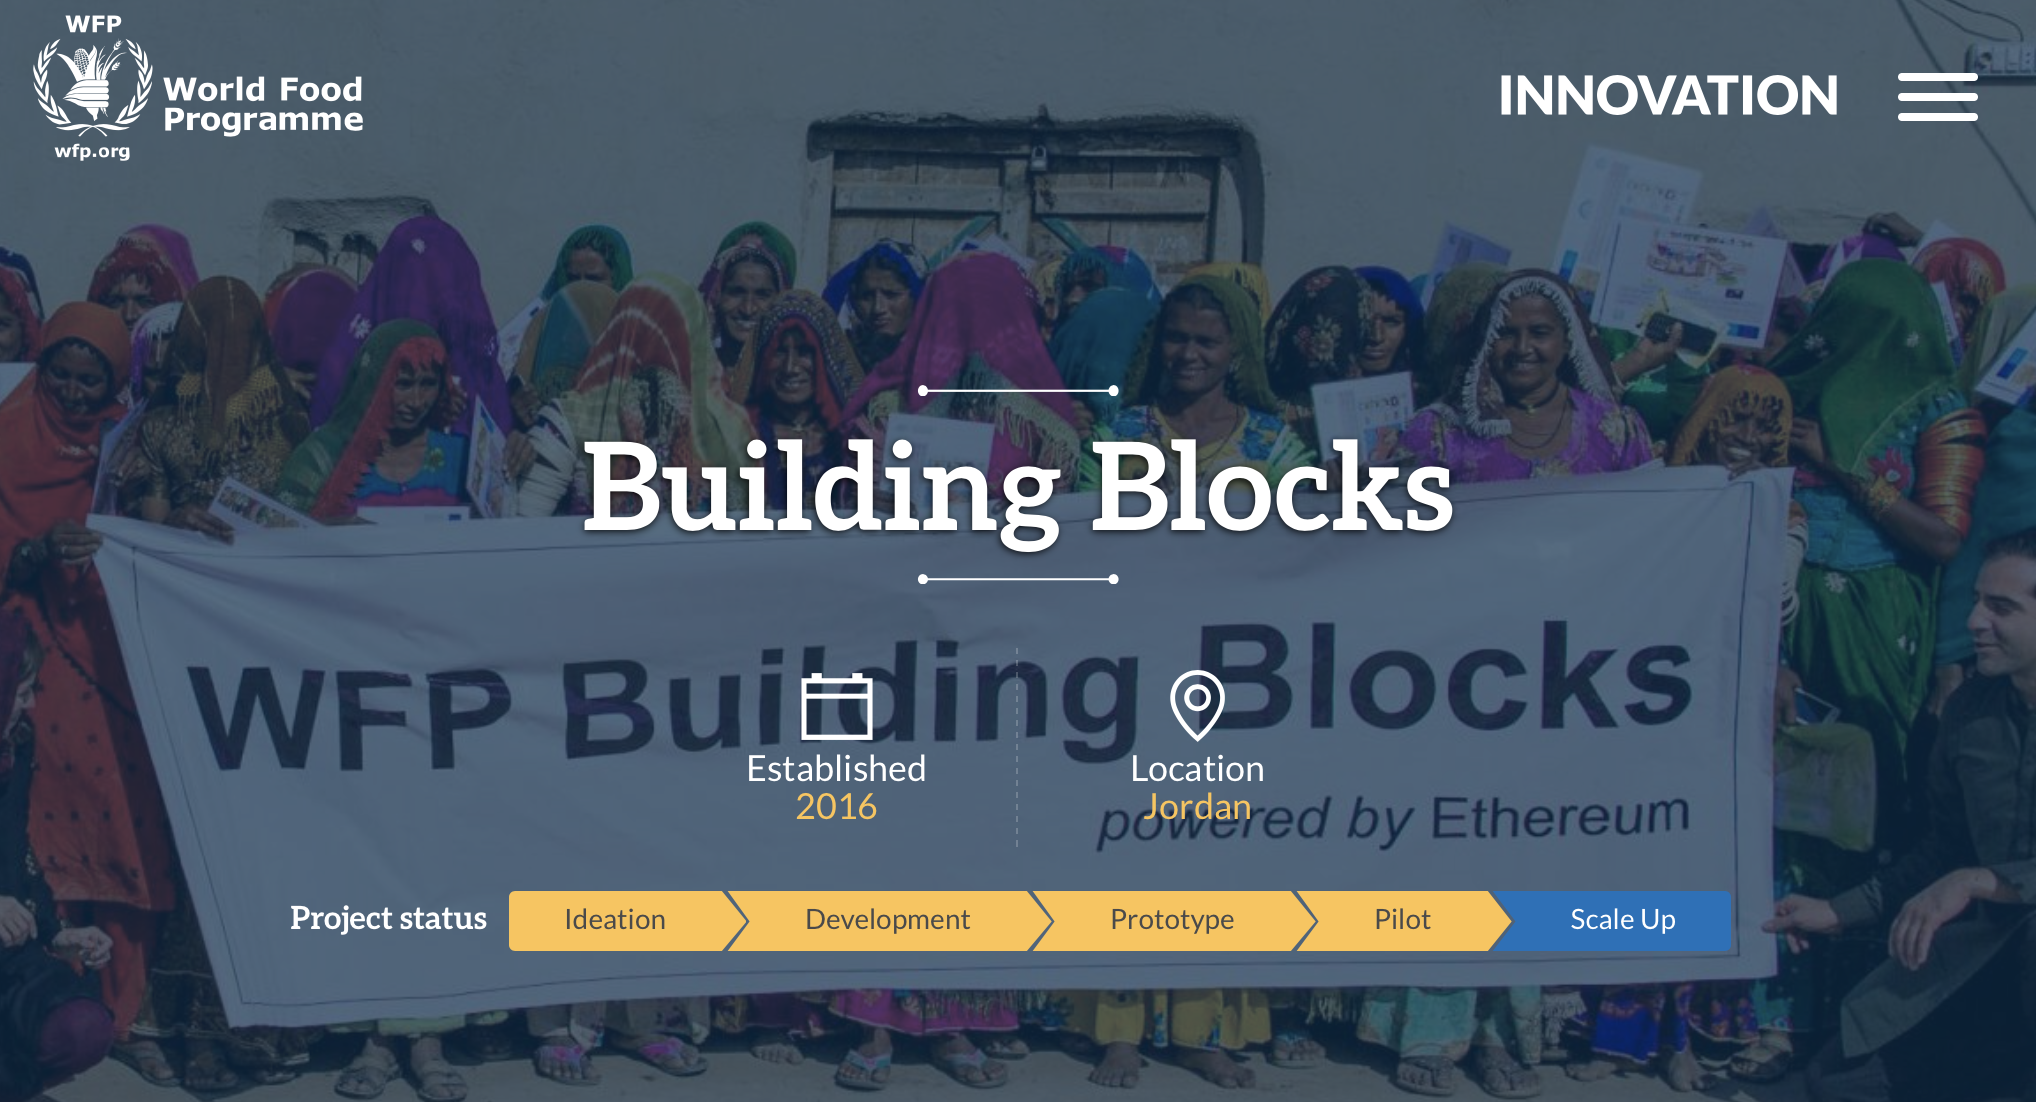 WFP Building Blocks